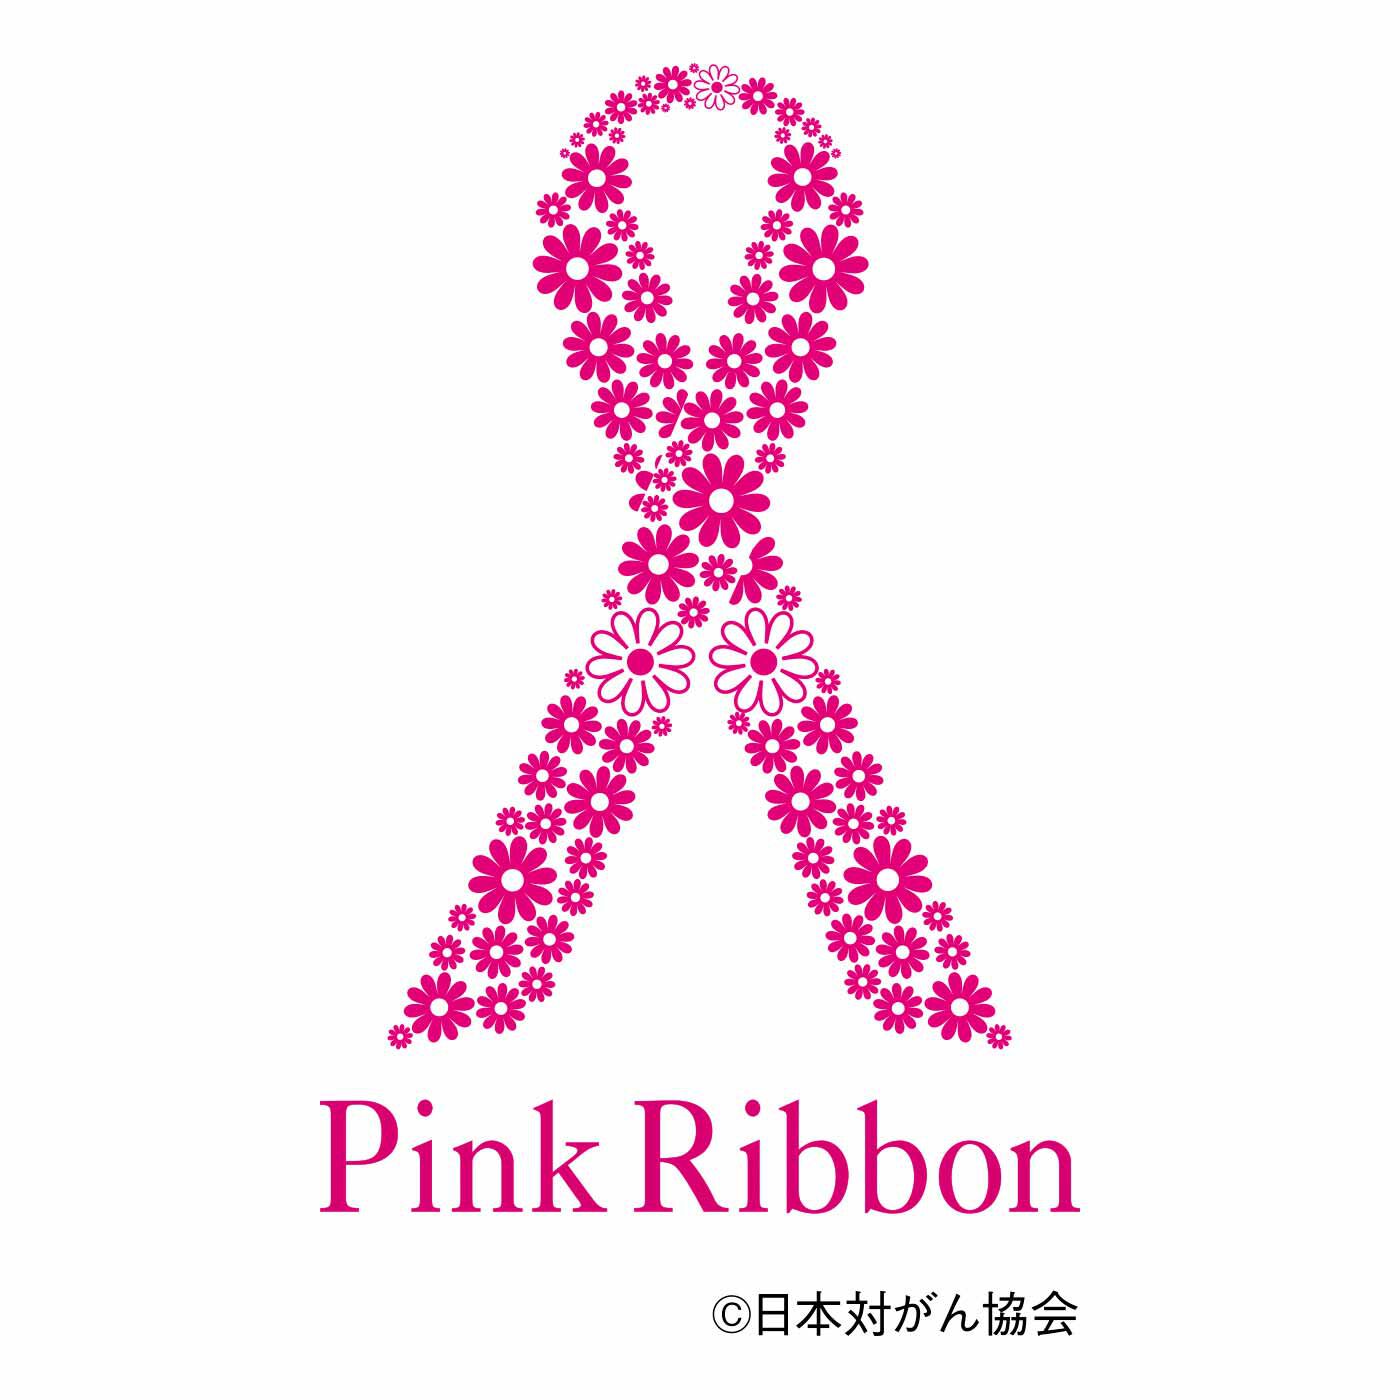 flufeel|ピンクリボン×すべての女性へ 気持ちとからだに寄り添う フラットブラの会|ピンクリボン基金付き。購入すると日本対がん協会の乳がんをなくす「ほほえみ基金」に寄付され、乳がんの早期発見のために定期的な検診受診をすすめる、ピンクリボンの活動を応援することができます。